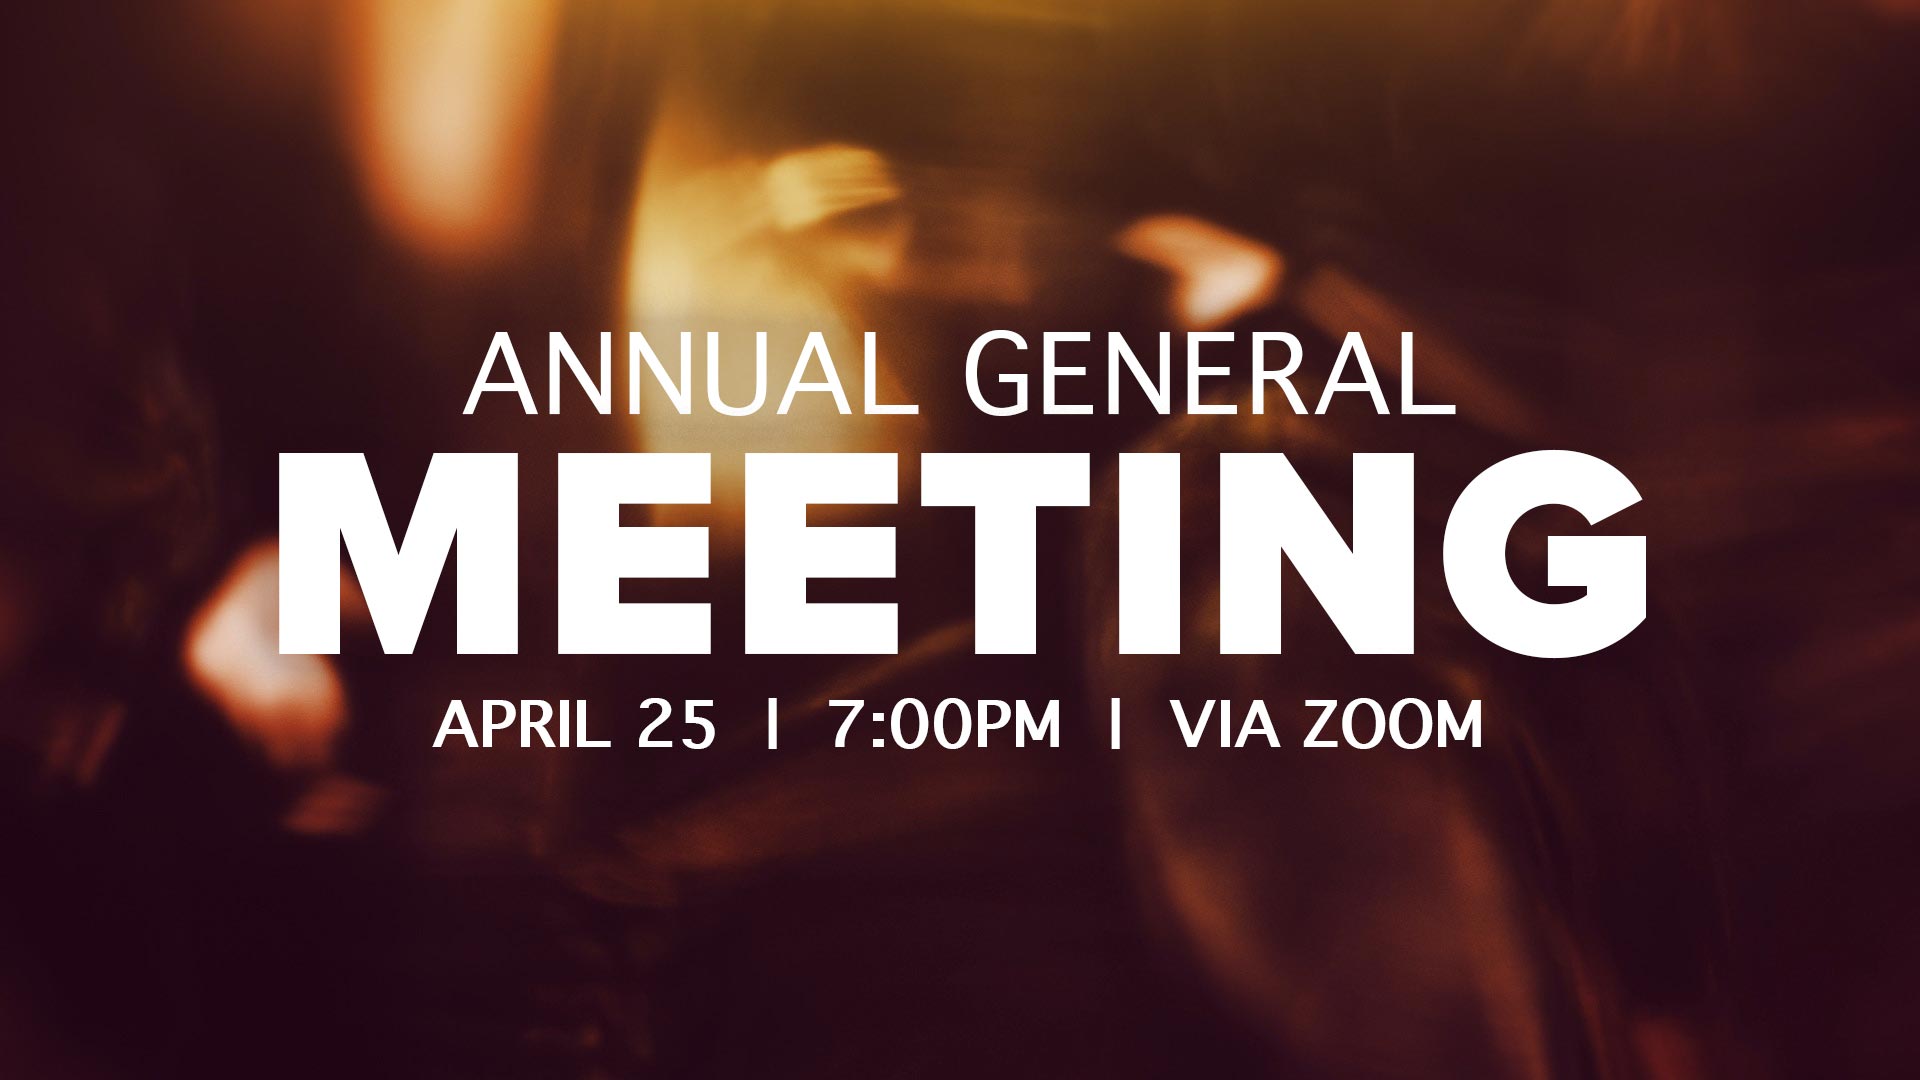 Annual General Meeting – Sunday, April 22